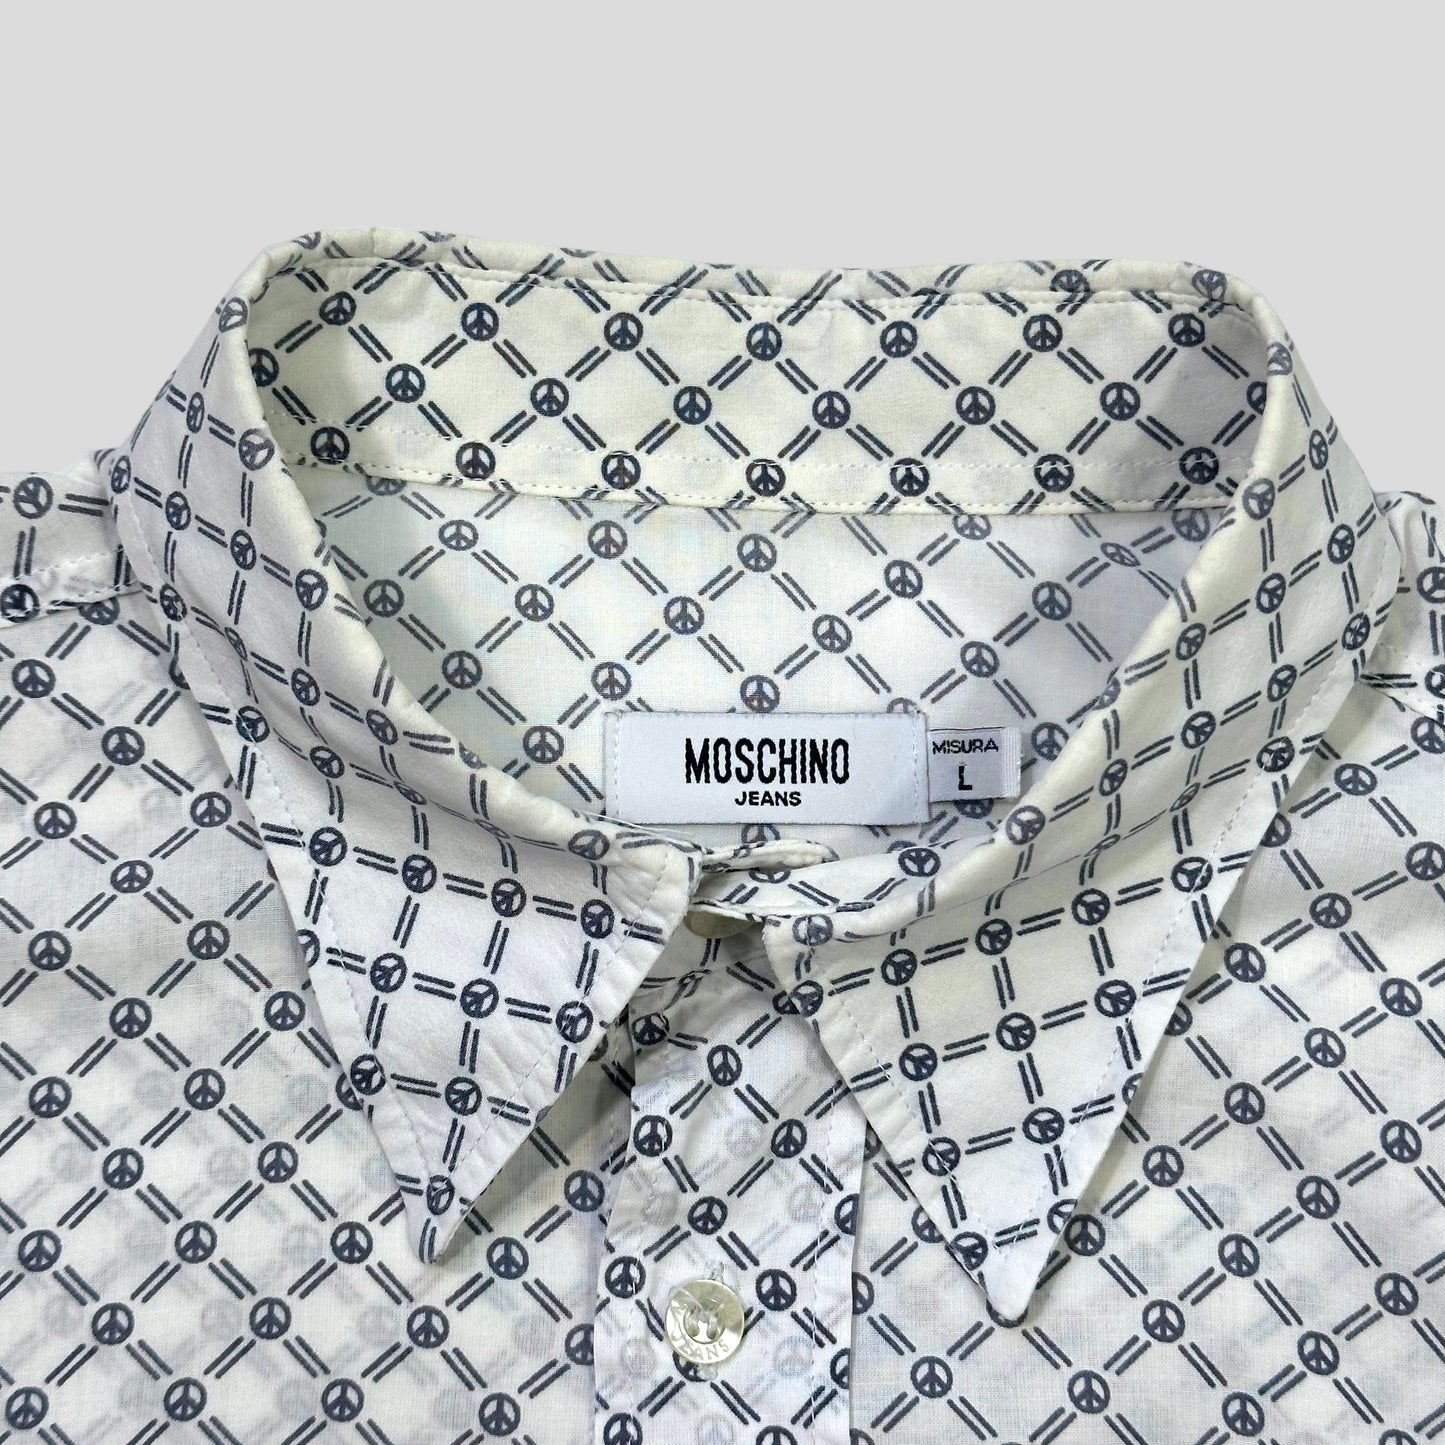 Moschino Jeans 00’s Peace Monogram Shirt - M